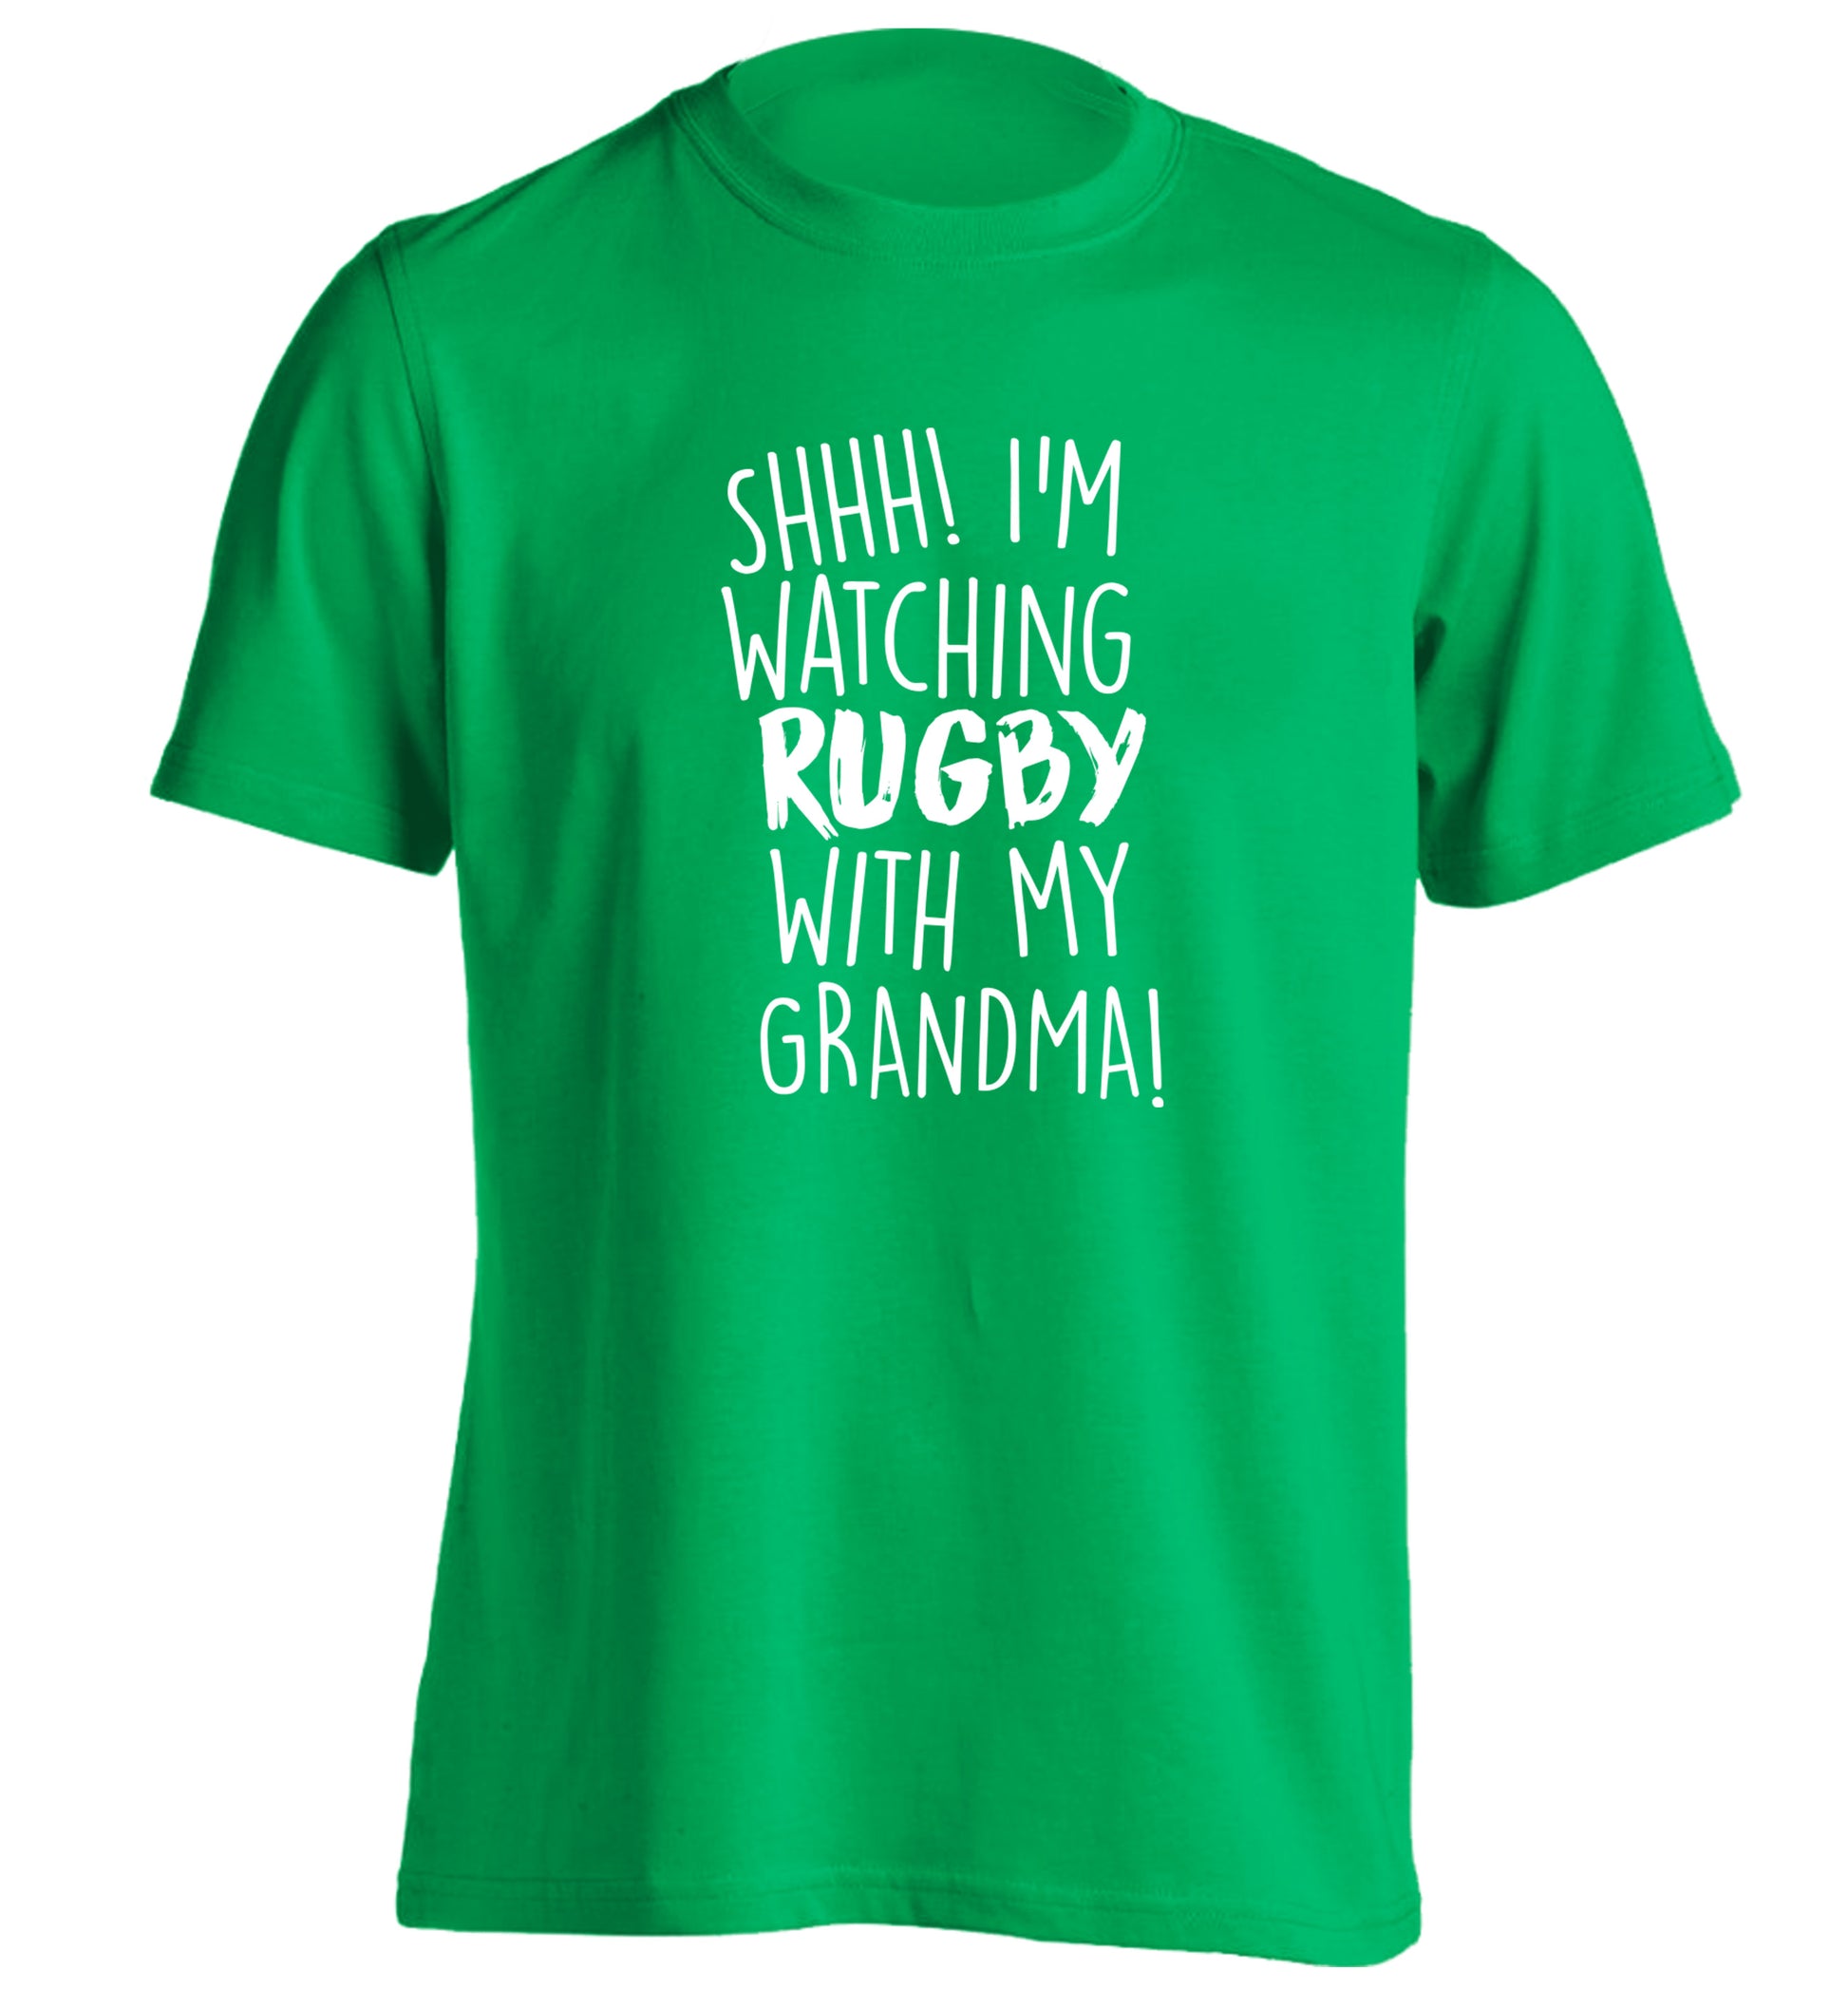 Shh I'm watching rugby with my grandma adults unisex green Tshirt 2XL